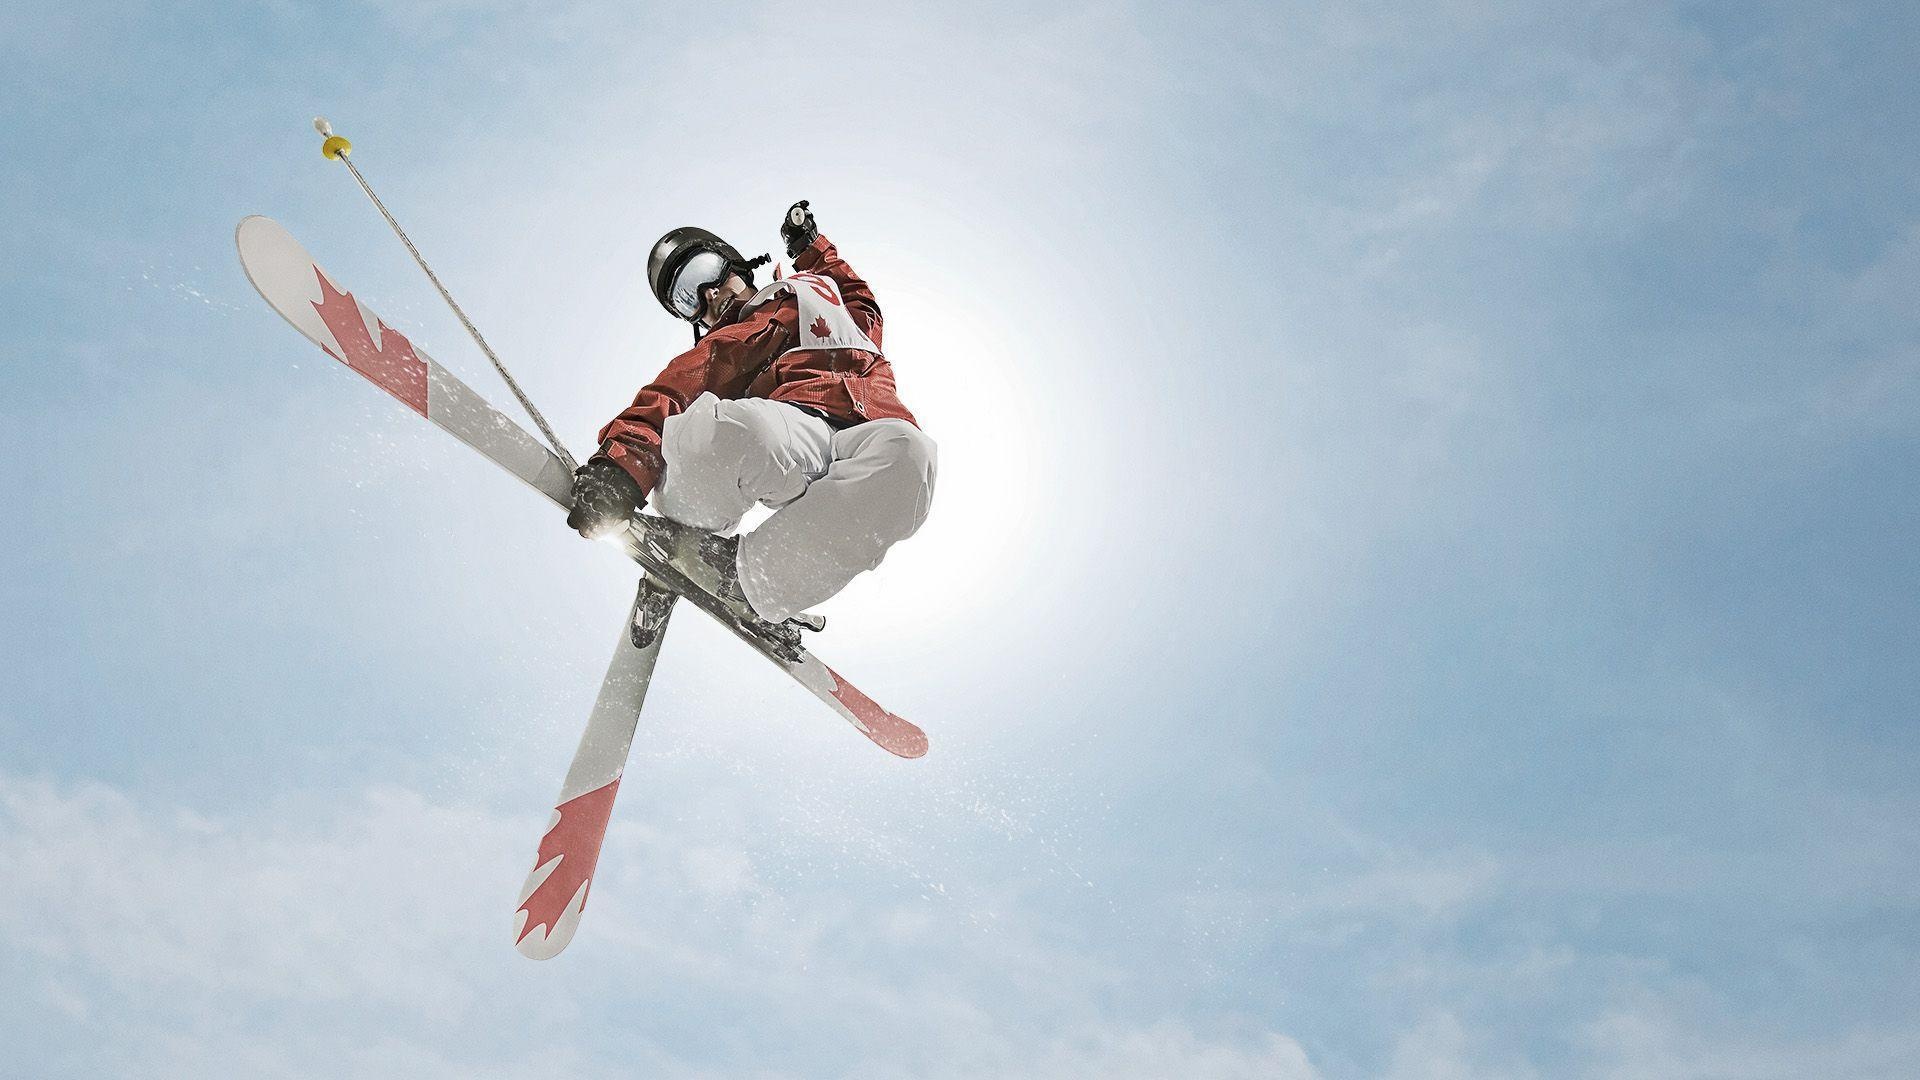 Freestyle Skiing, Sports adrenaline rush, Gravity-defying tricks, Skiing passion, 1920x1080 Full HD Desktop